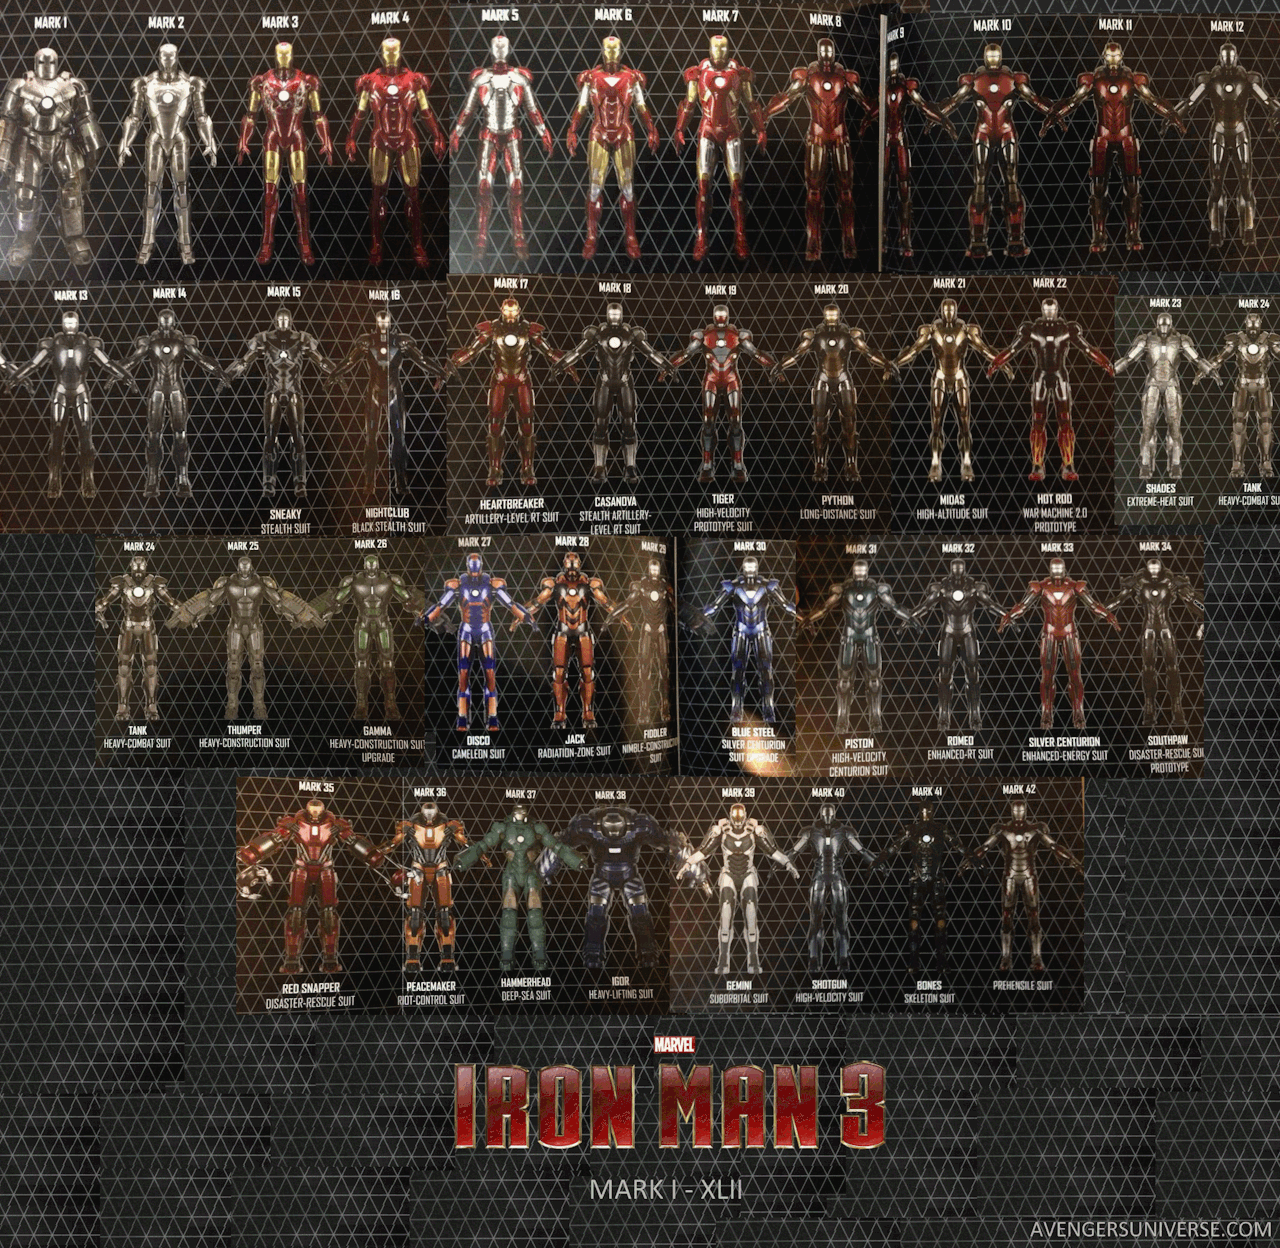 Iron Man 3 All Suits Wallpaper Iron man 3 trailer wallpaper All Iron